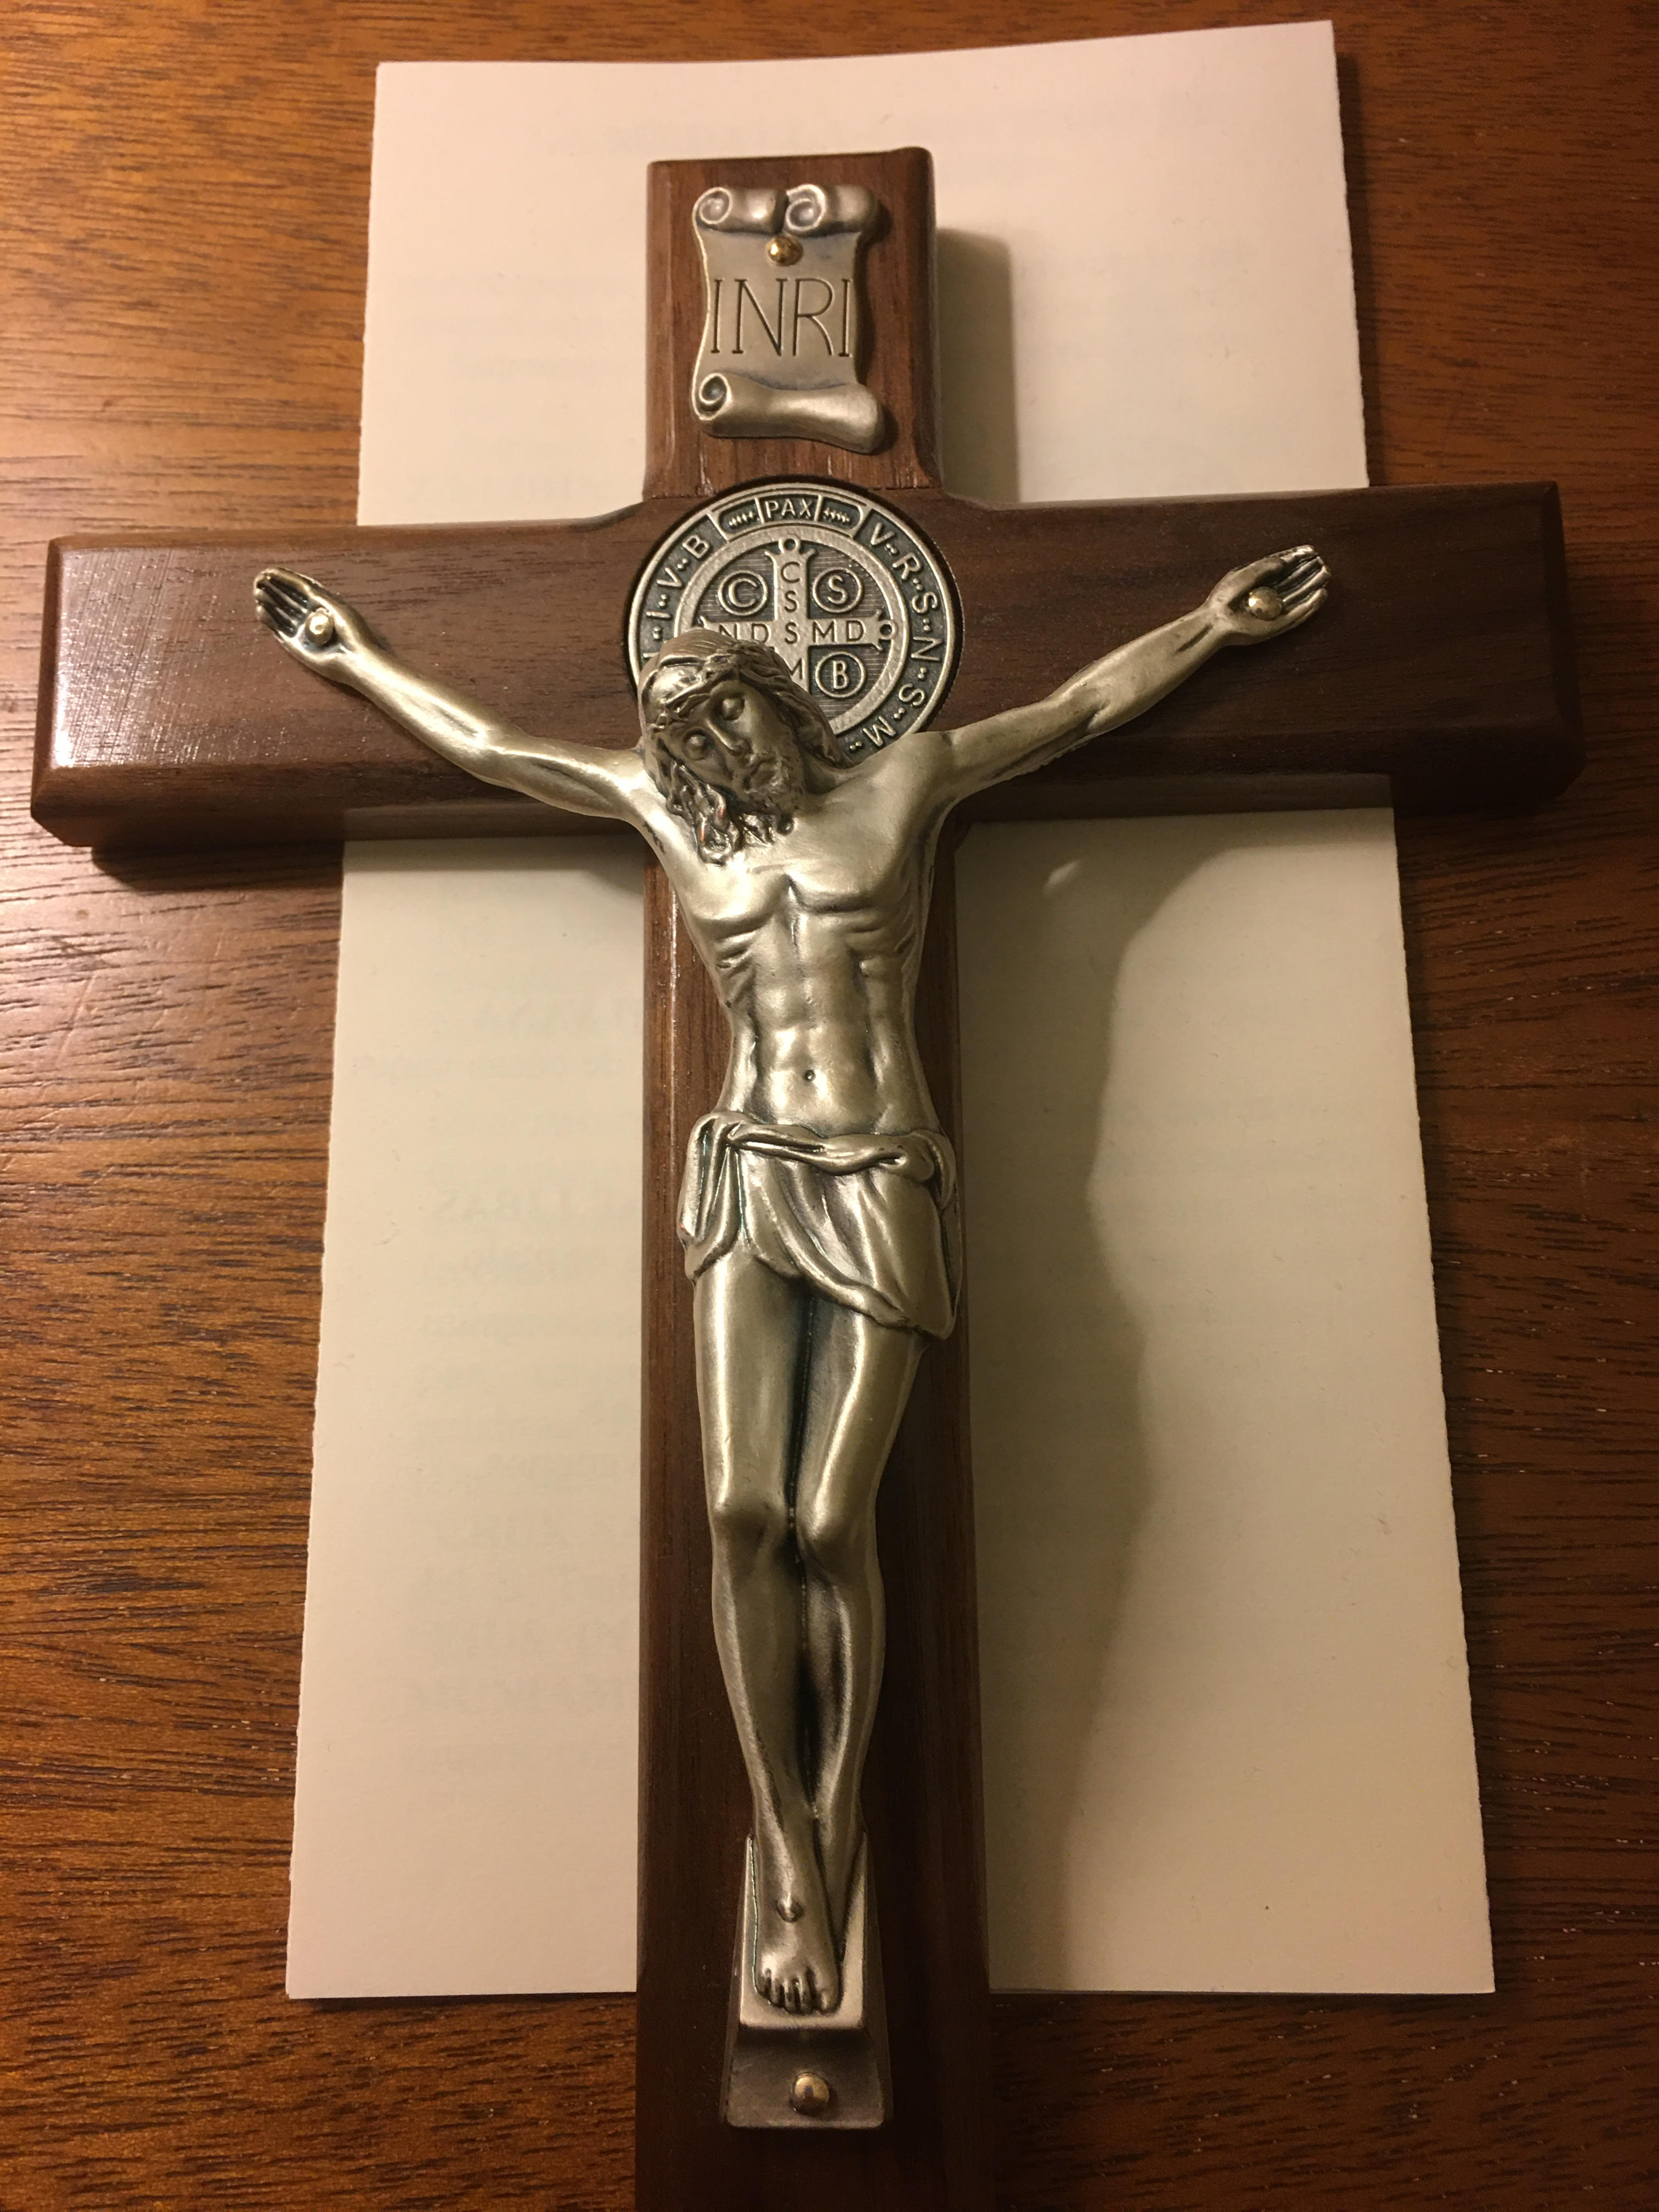 Benedictine Crucifix